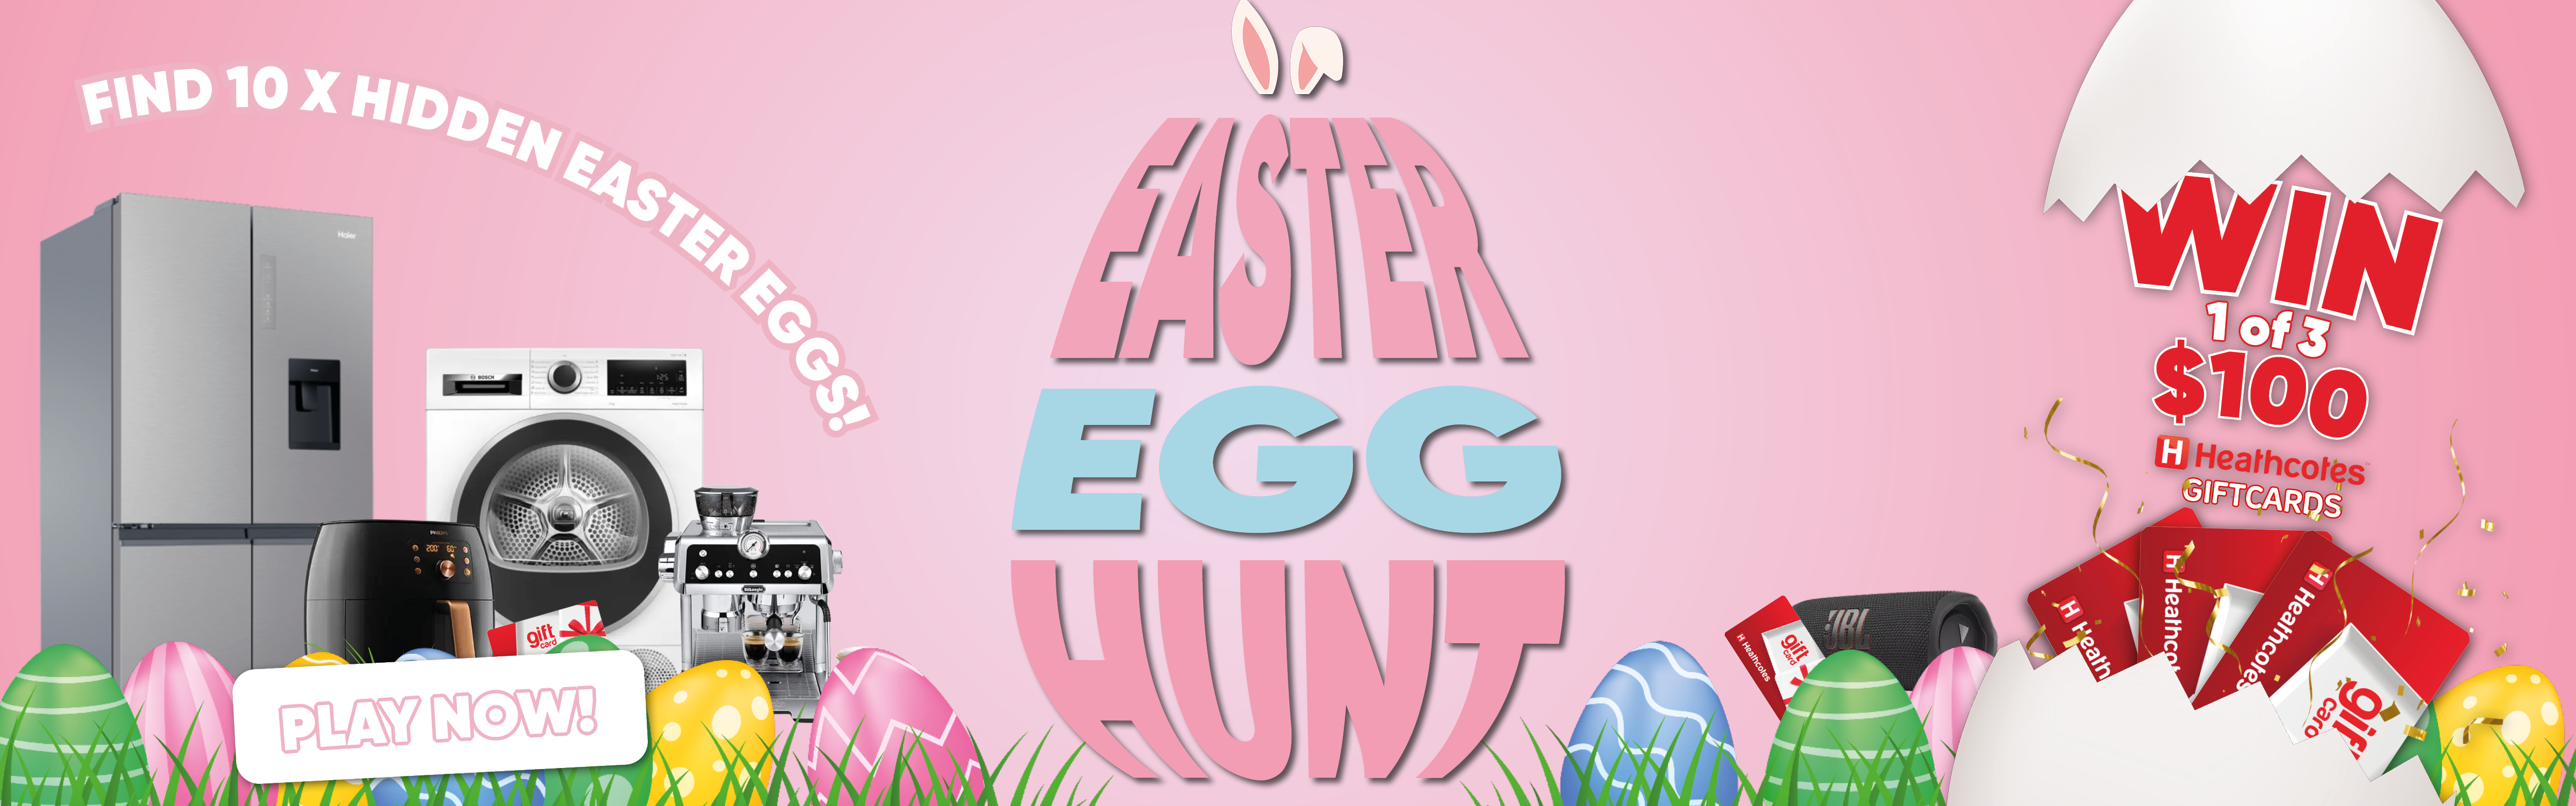 Easter egg hunt artwork3